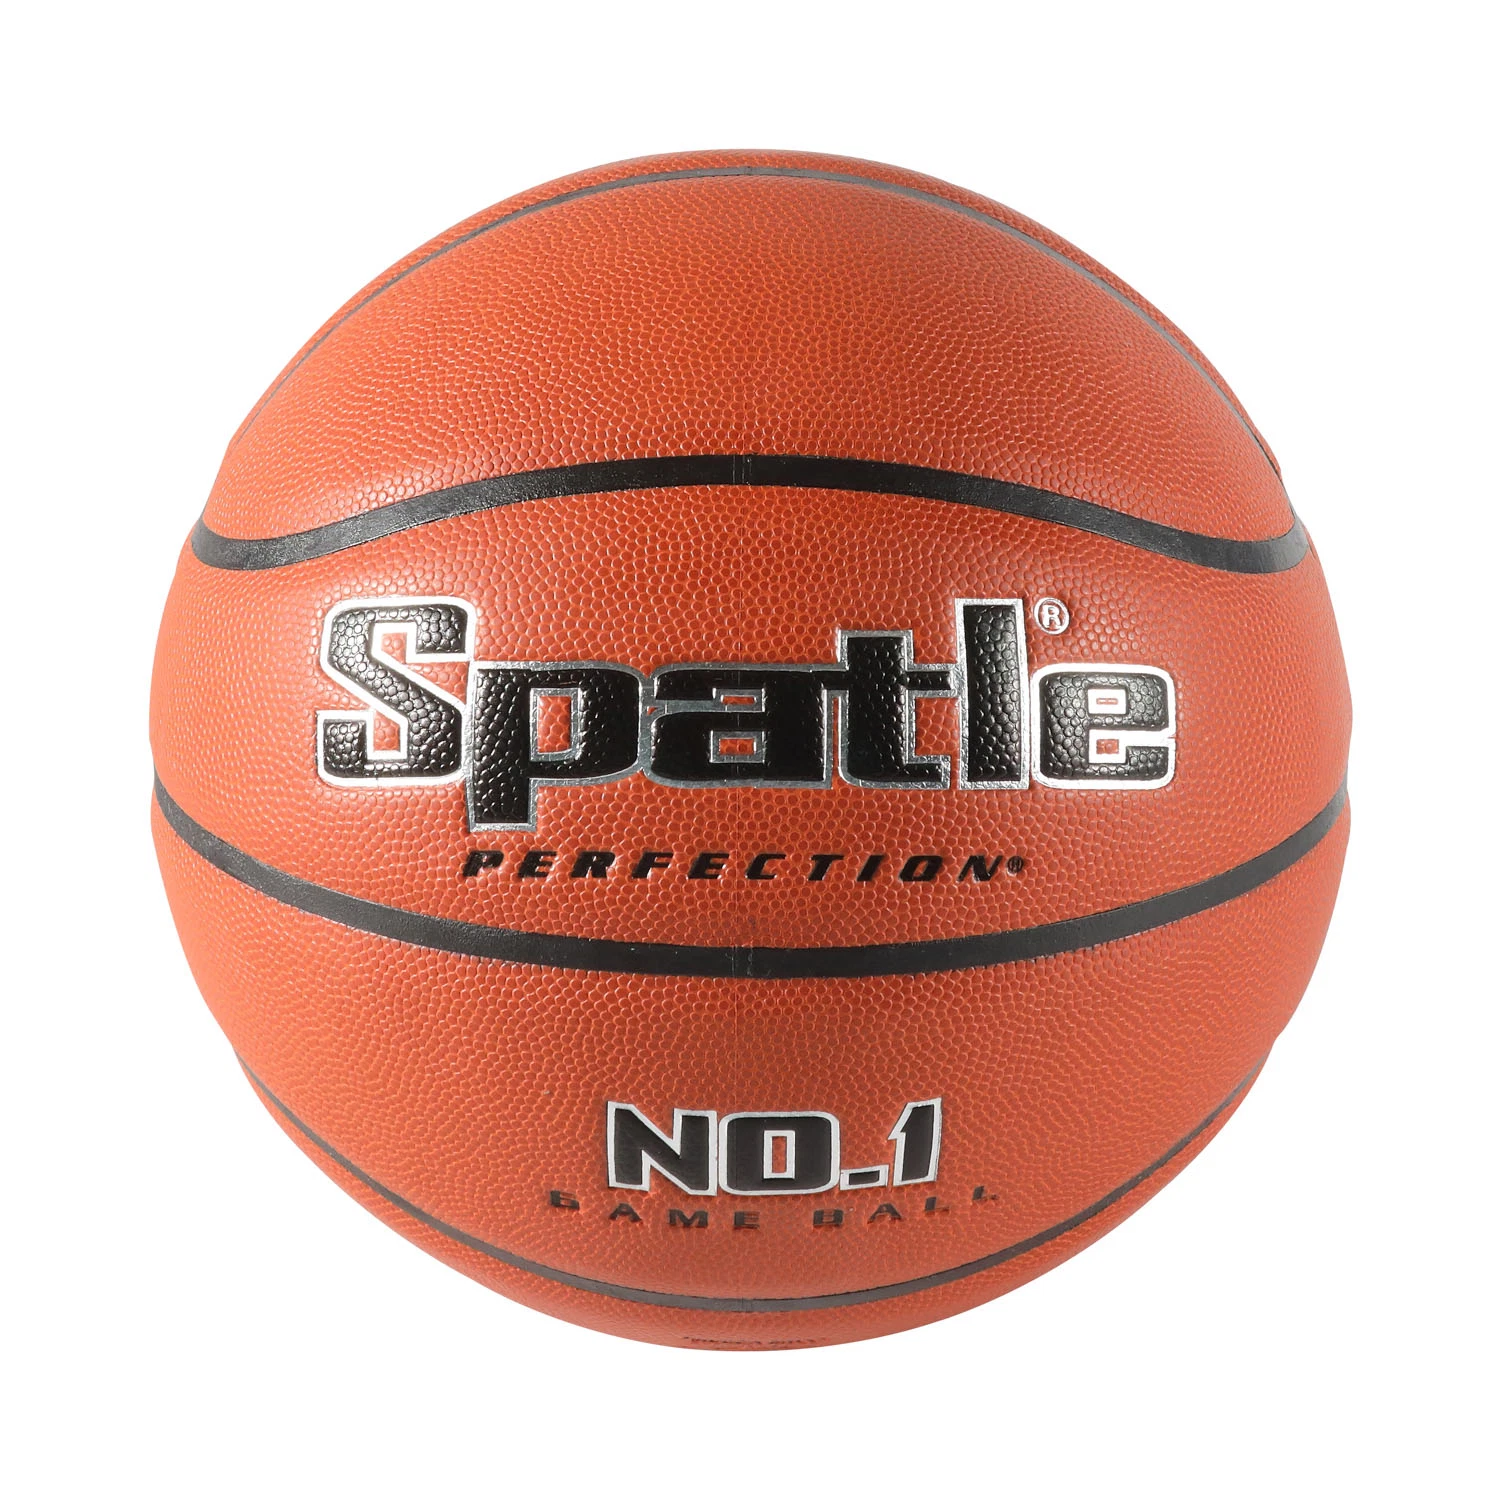 Advanced Custom Logo Microfaser Basketball